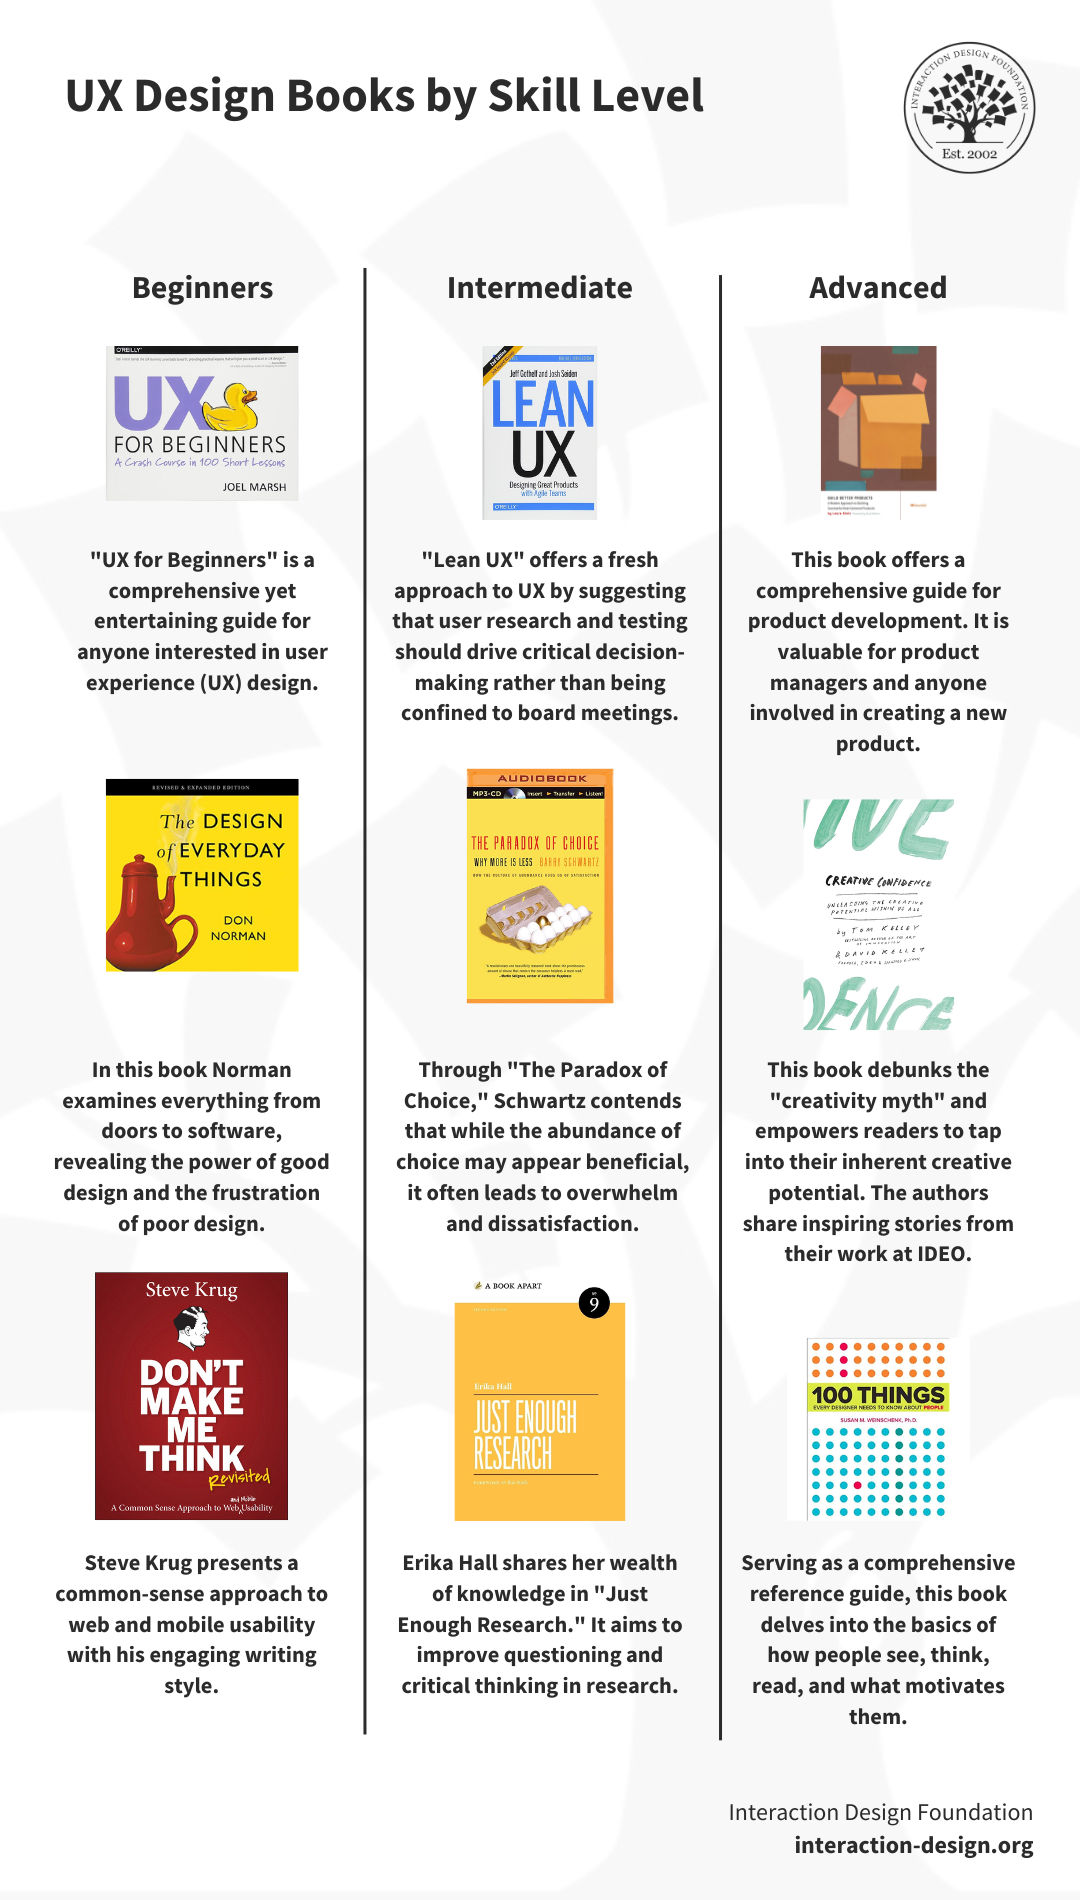 A brief description of various UX design books across three levels, beginner, intermediate and advanced.